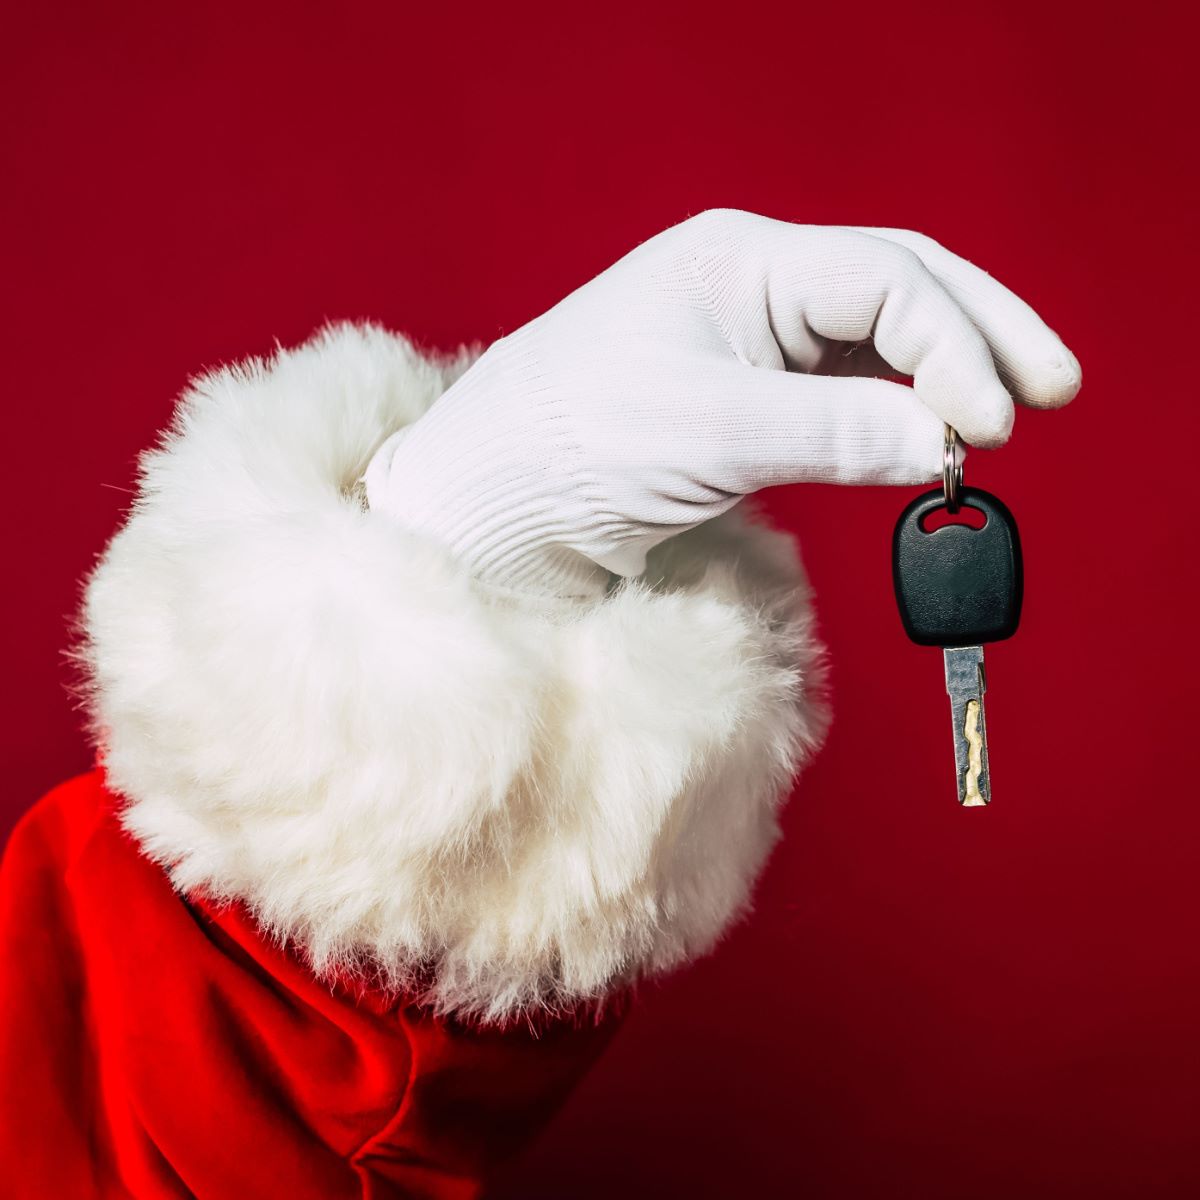 Close up of Santa's hand holding a car key, reminding everyone to drive safely this holiday season.